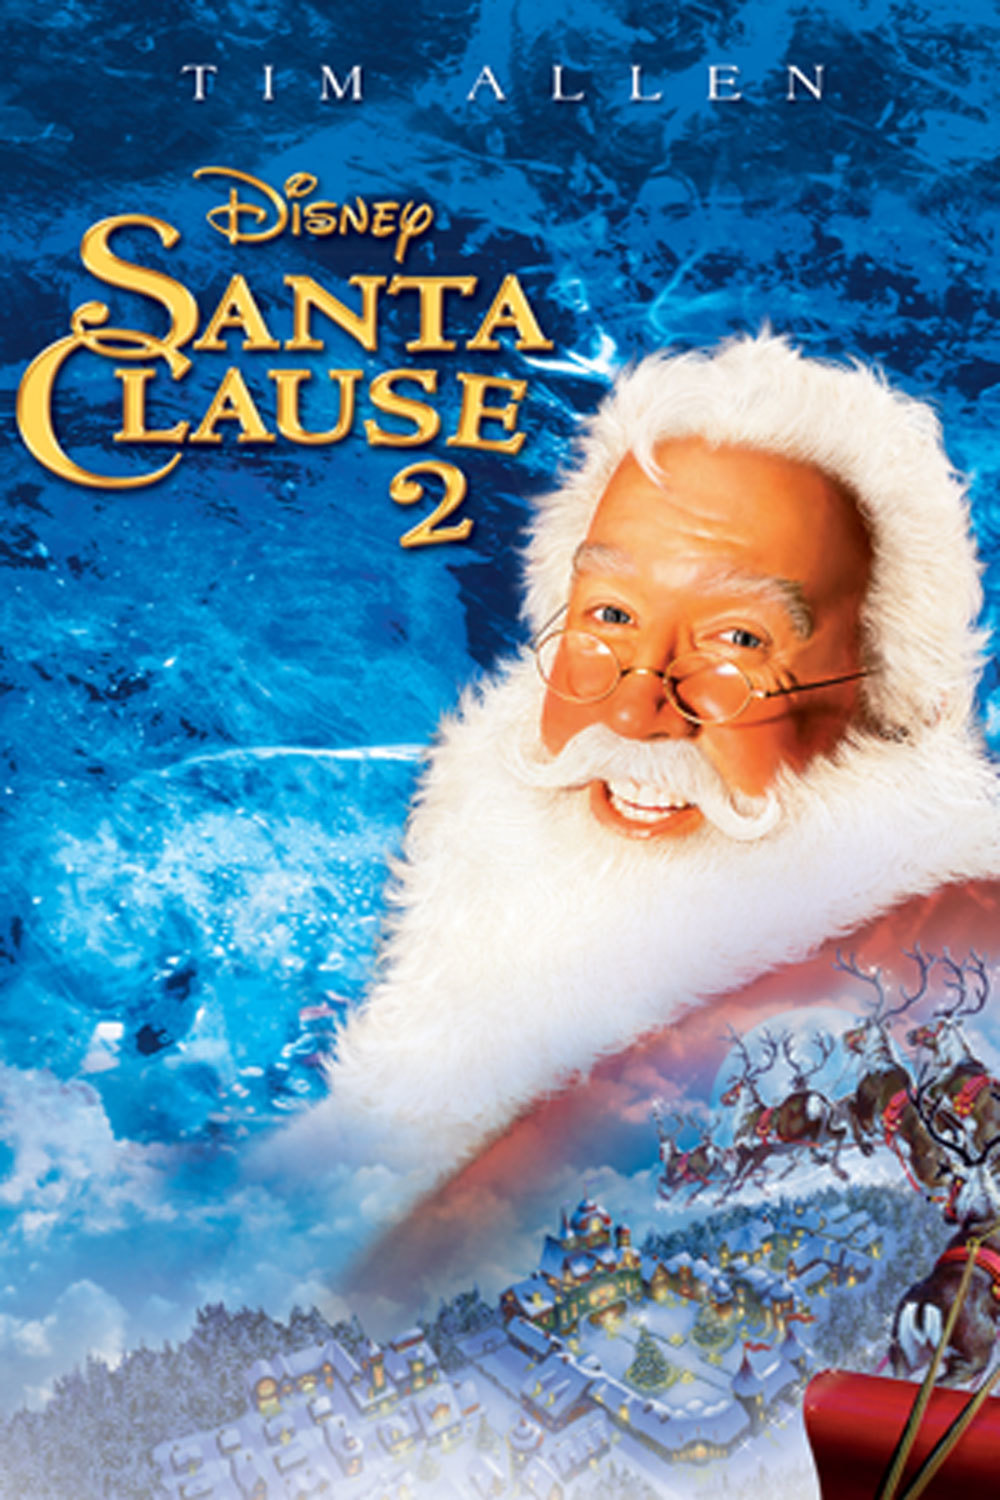 Disney's The Santa Clause 2